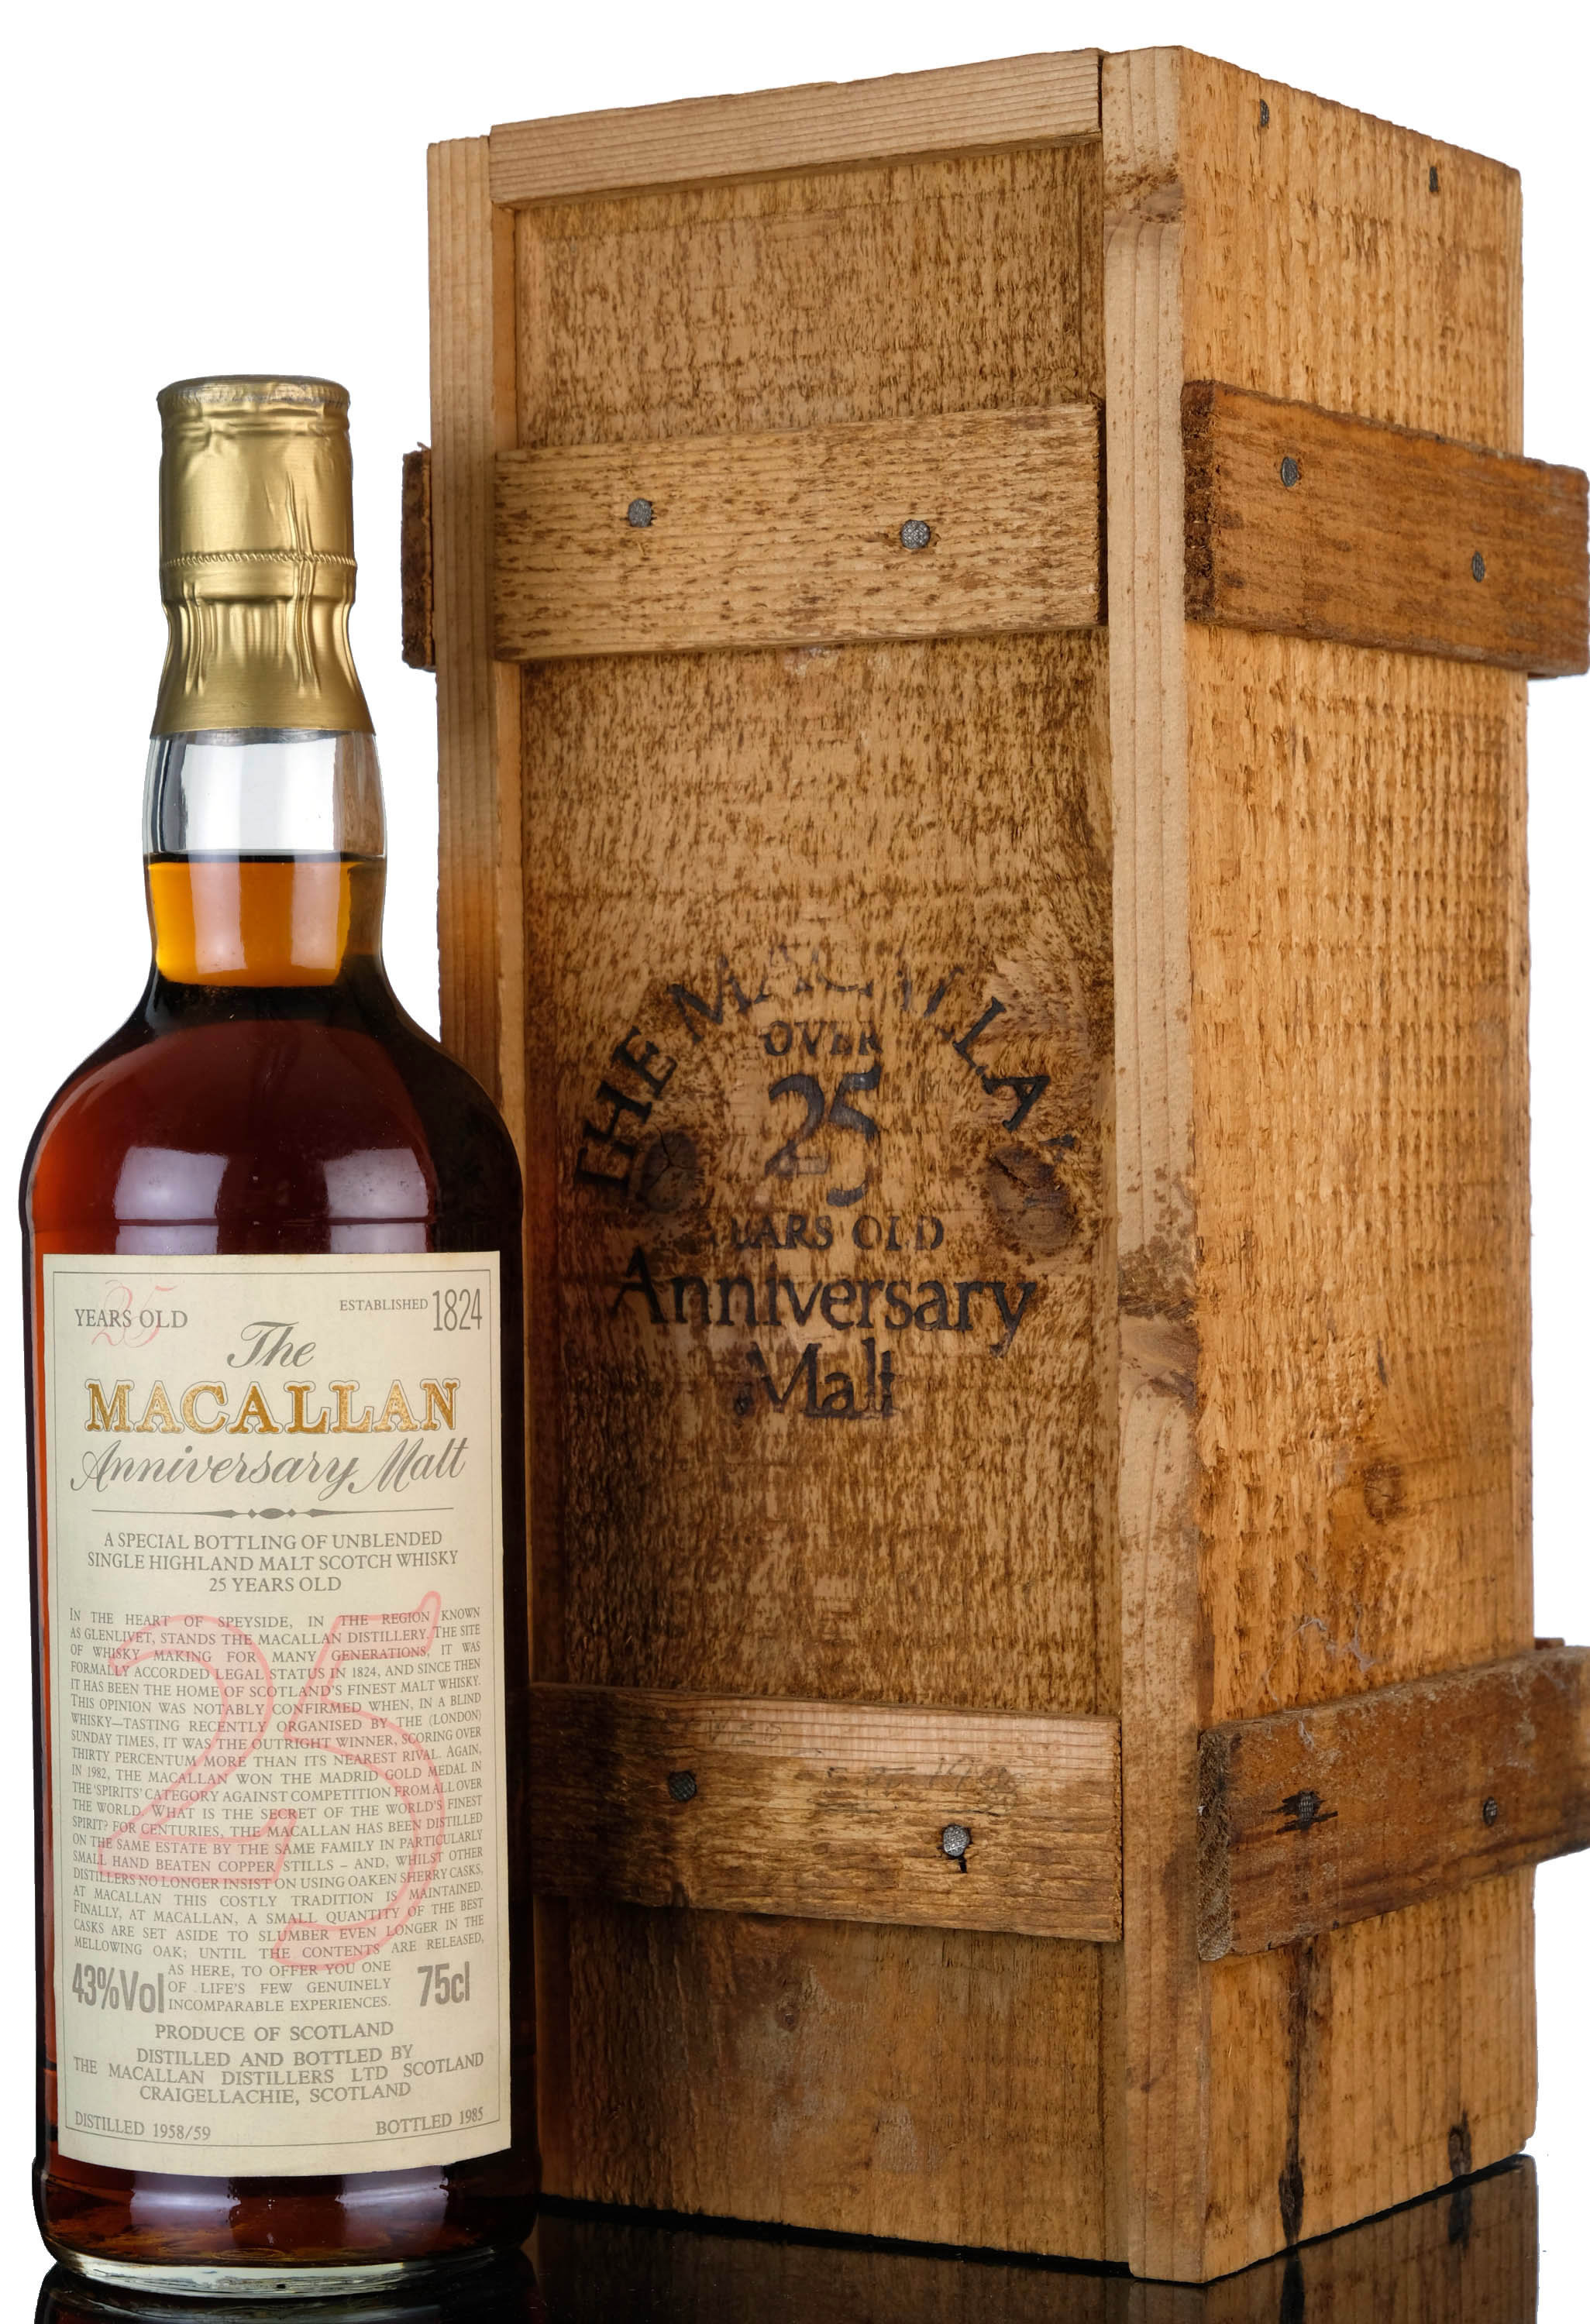 Macallan 1958/1959-1985 - 25 Year Old Anniversary Malt